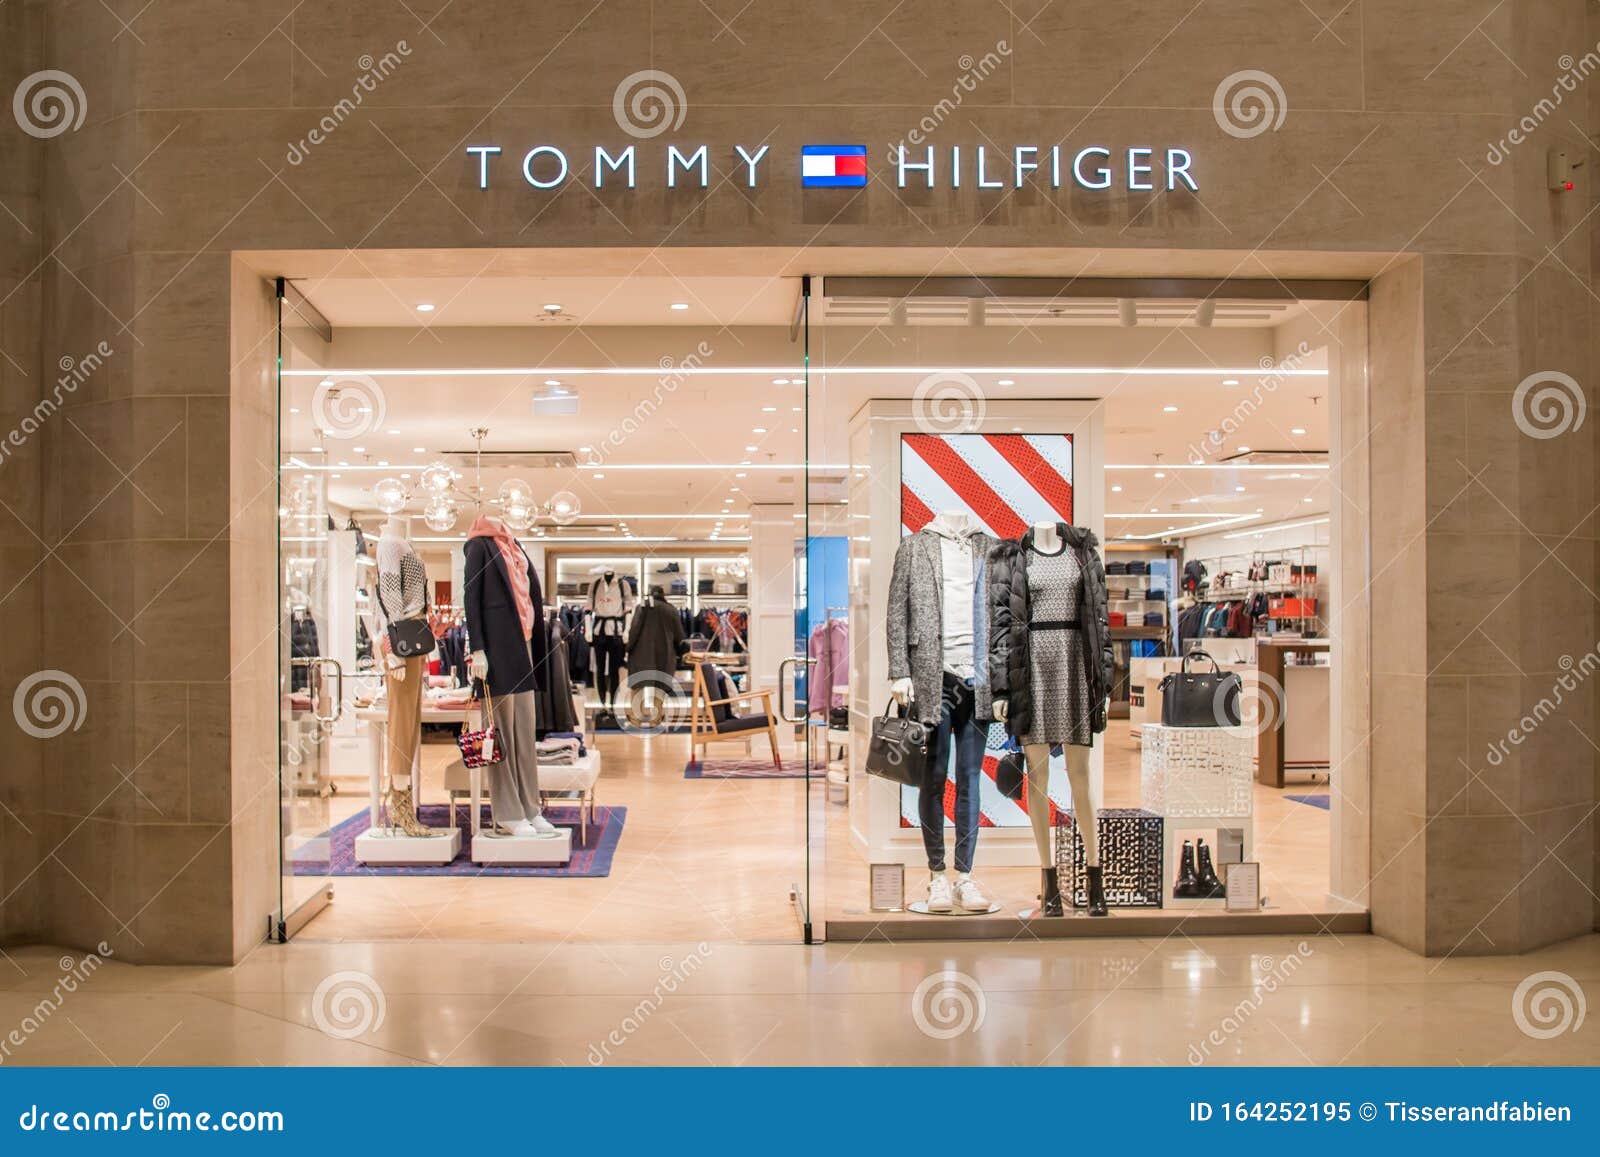 tommy hilfiger fashion outlet